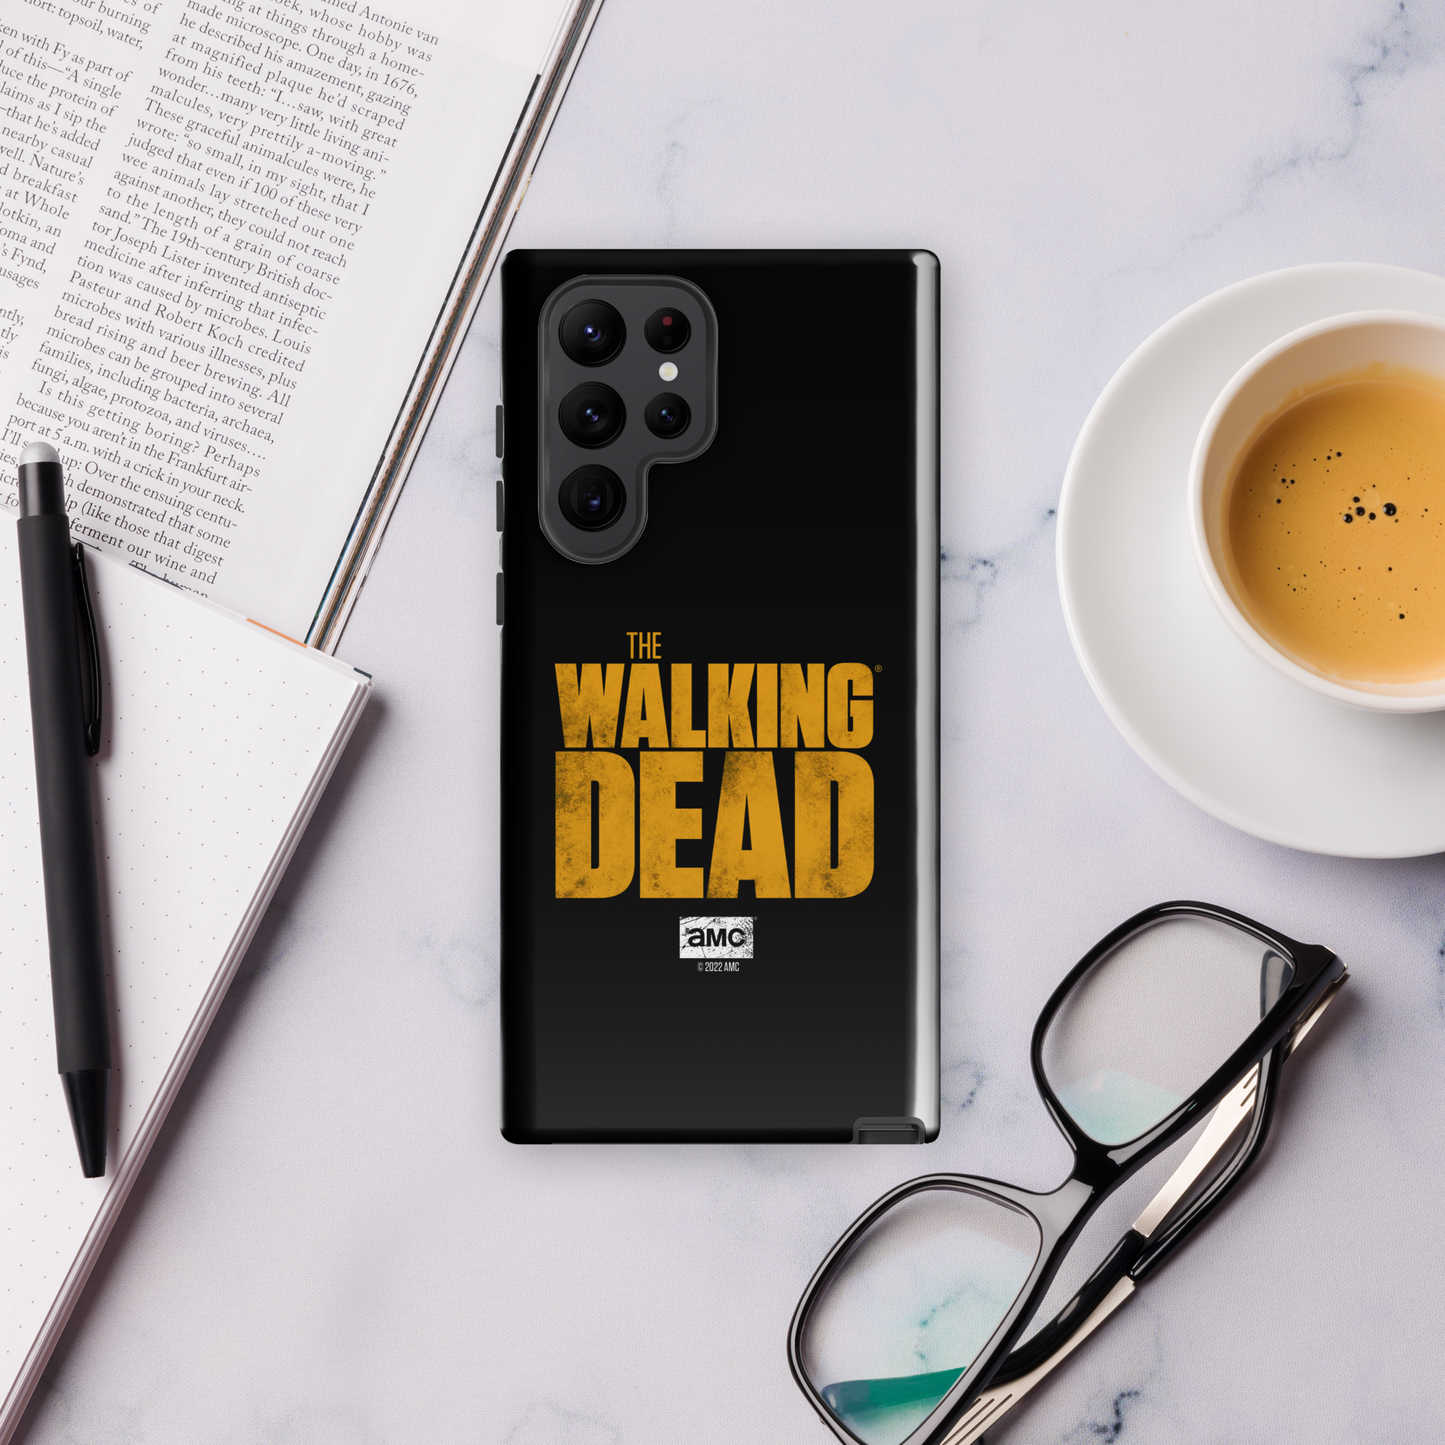 The Walking Dead Logo Tough Phone Case - Samsung